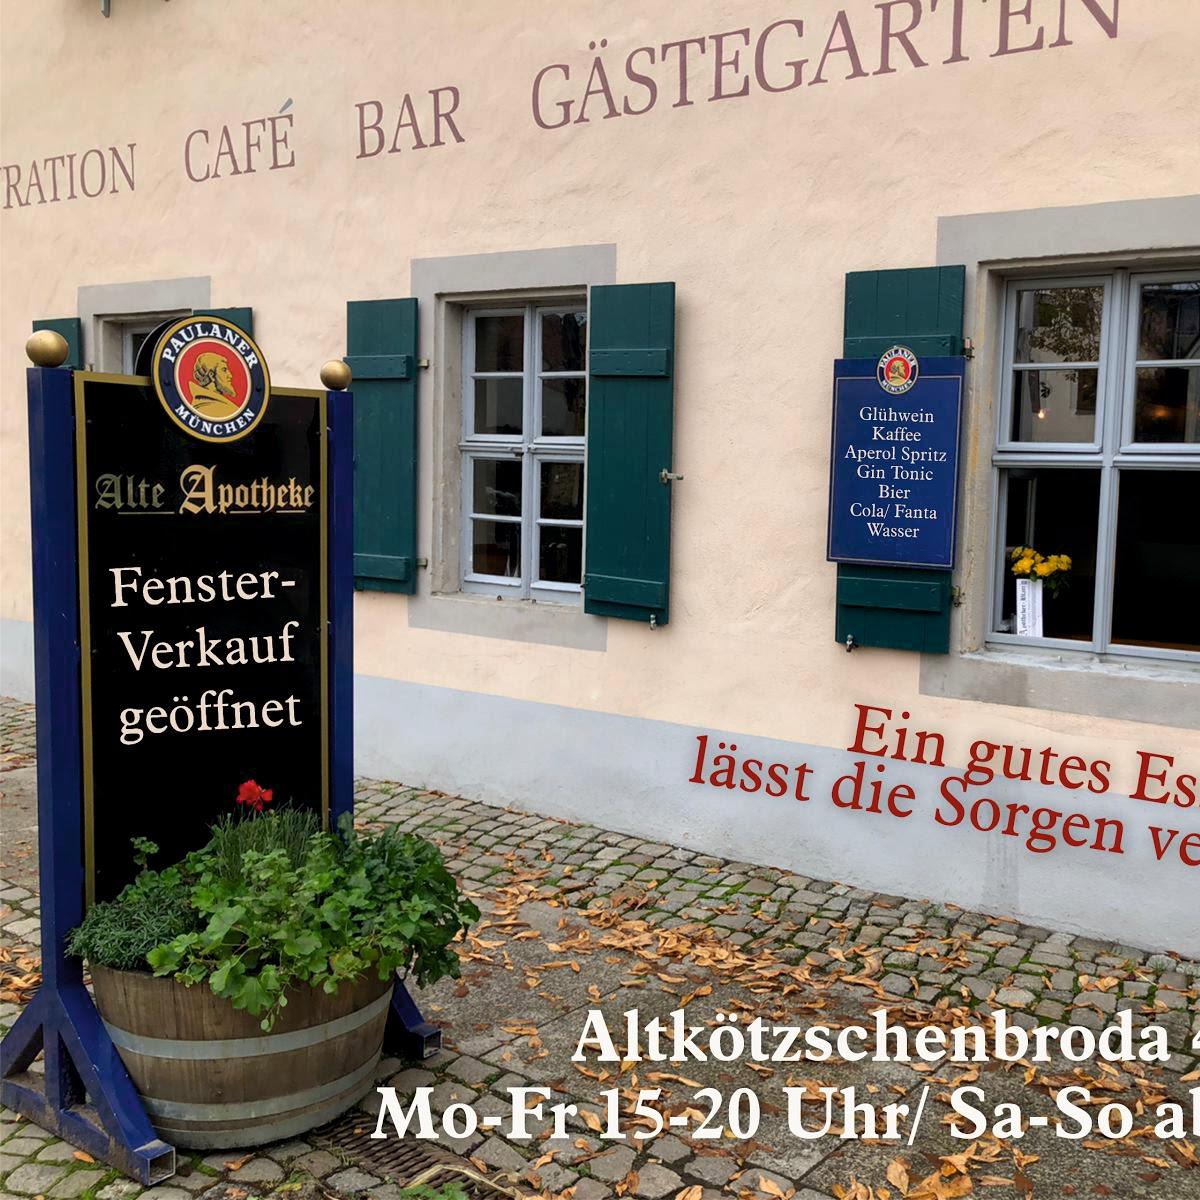 Restaurant "Alte Apotheke" in Radebeul